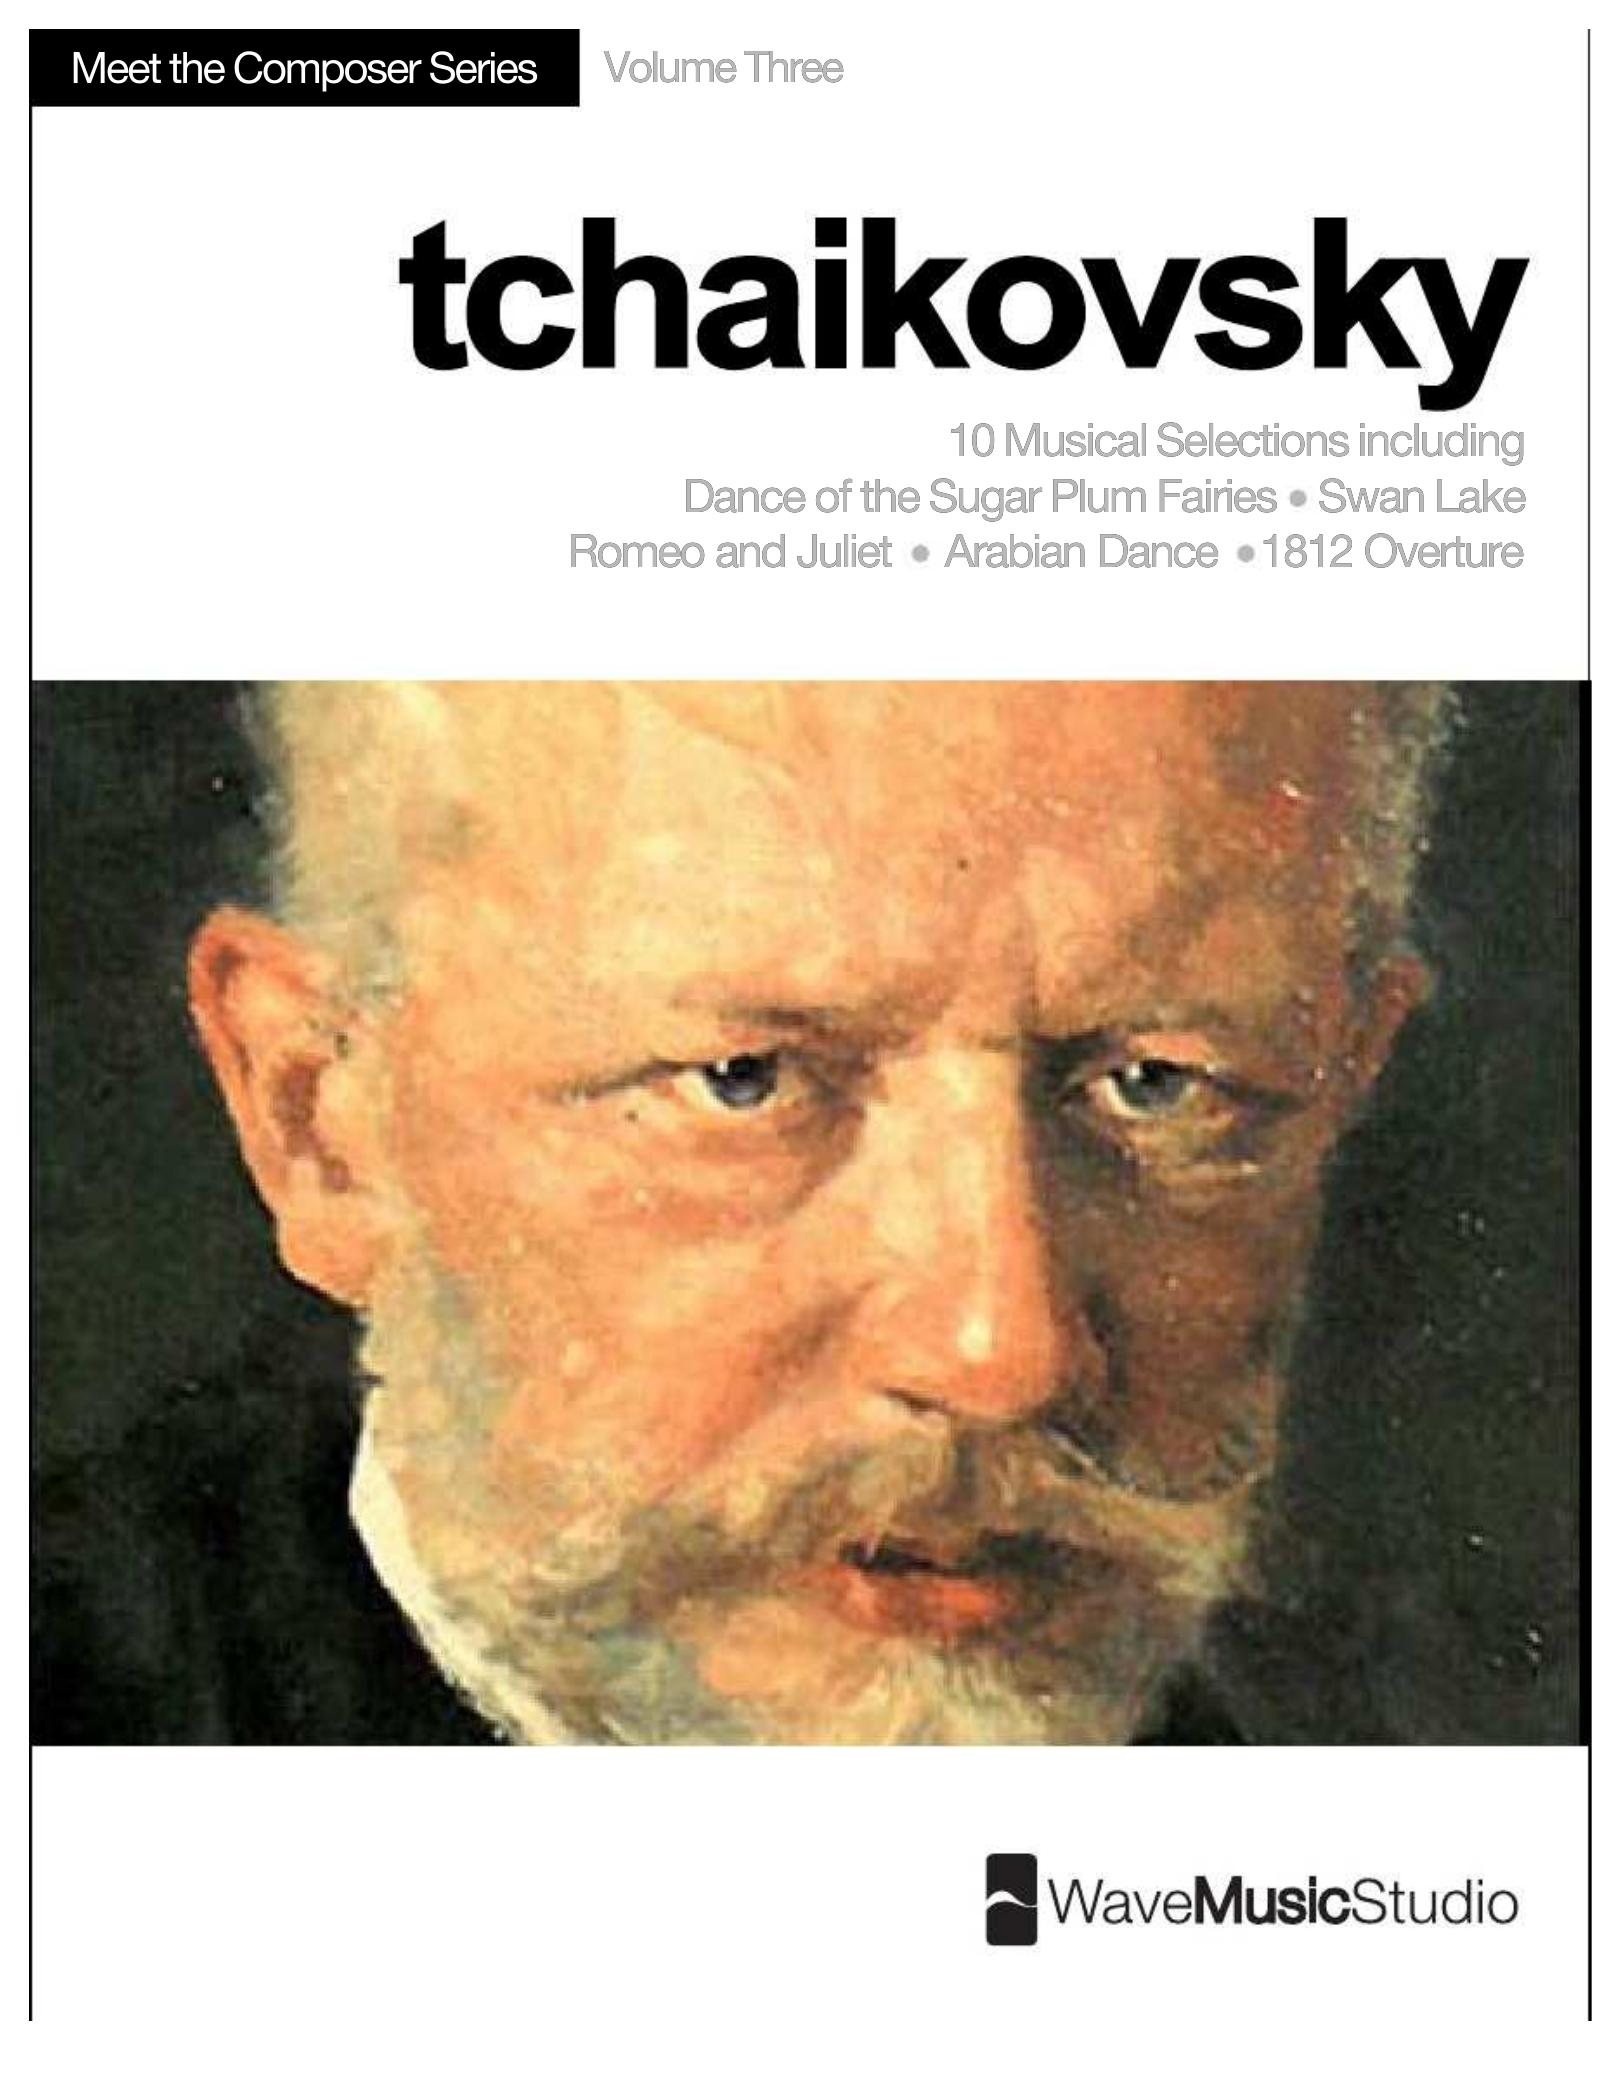 Tchaikovsky Waltz From The Sleeping Beauty Suite Rachmaninoff 4 Hands Piano Sheet Music 